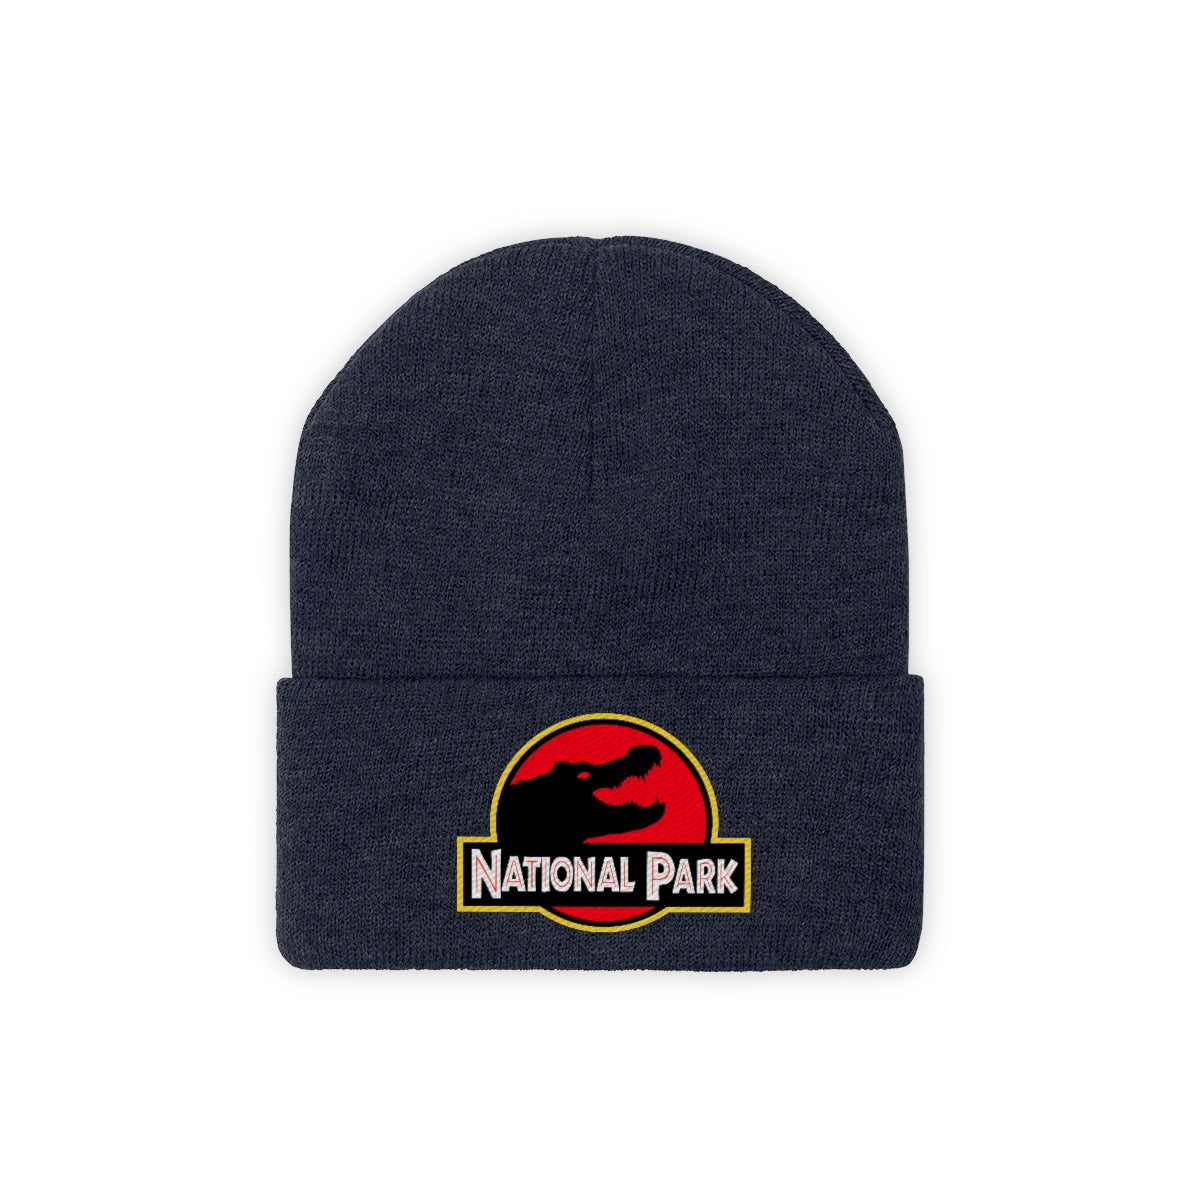 Everglades National Park Hat - Knit Beanie Sewn Parody Logo